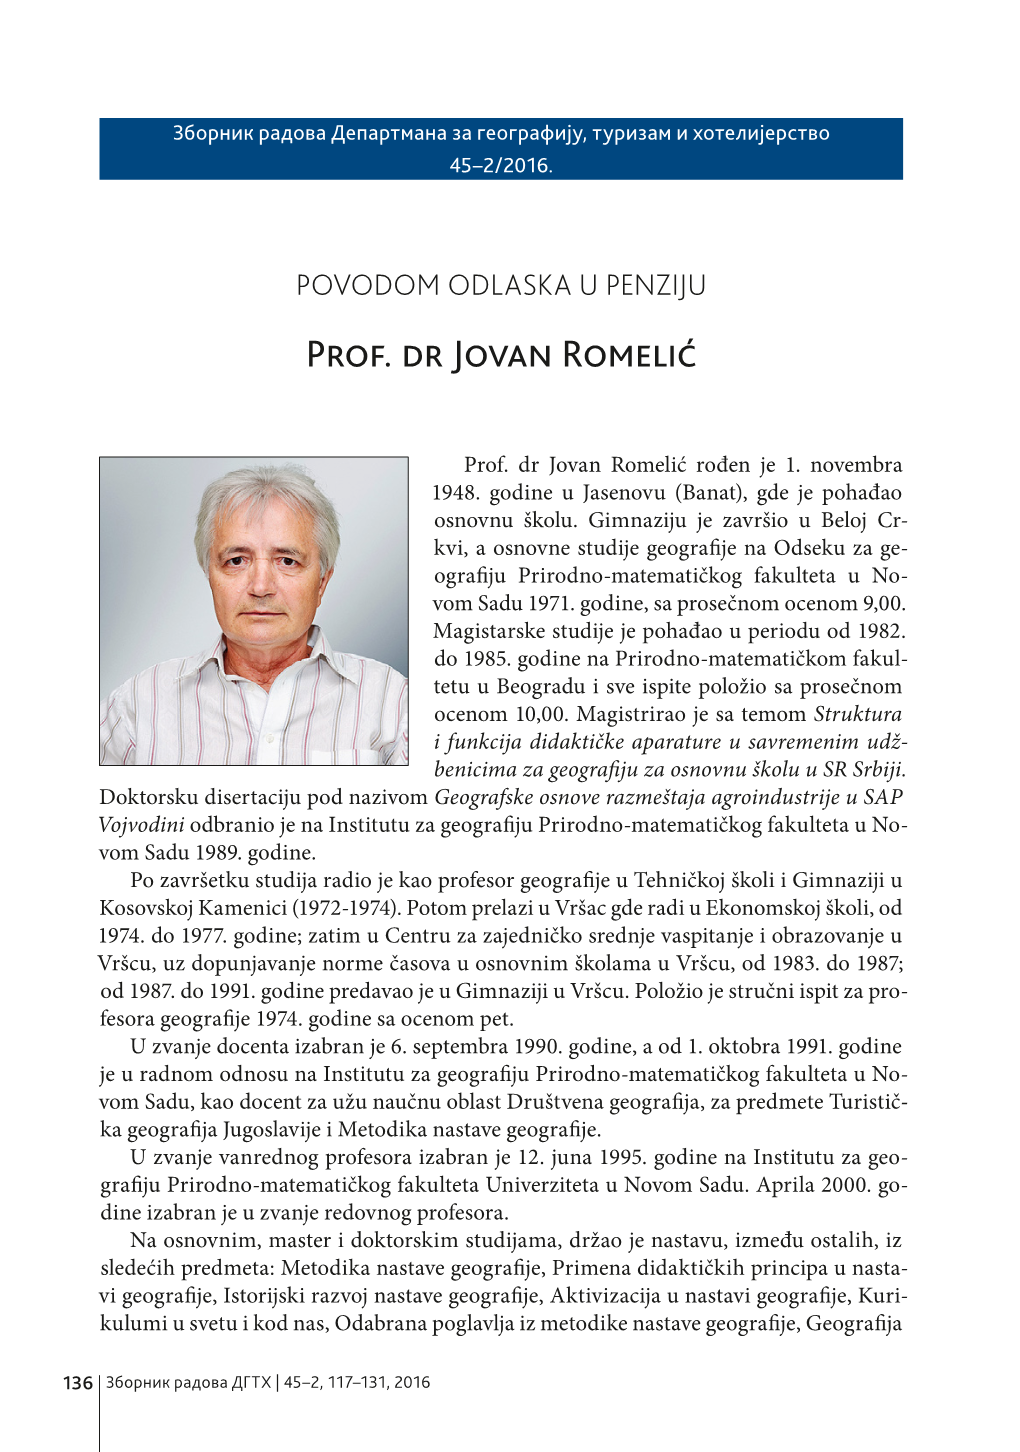 Prof. Dr Jovan Romelić